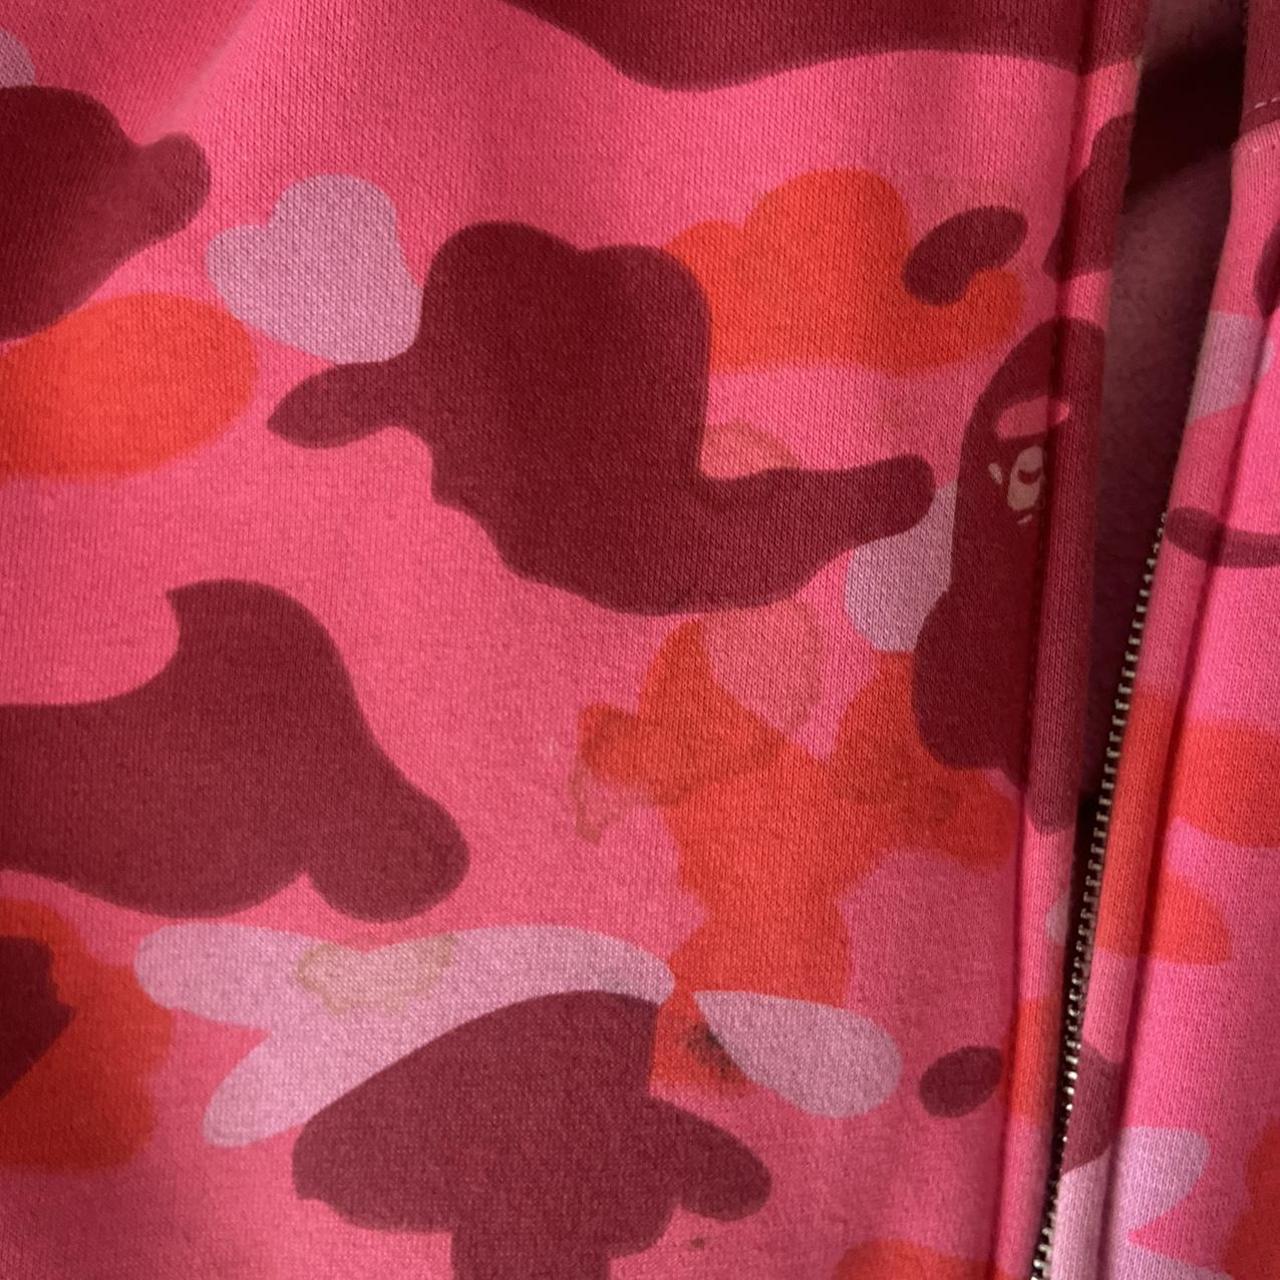 bape jacket pink (has a few stains on it) - Depop